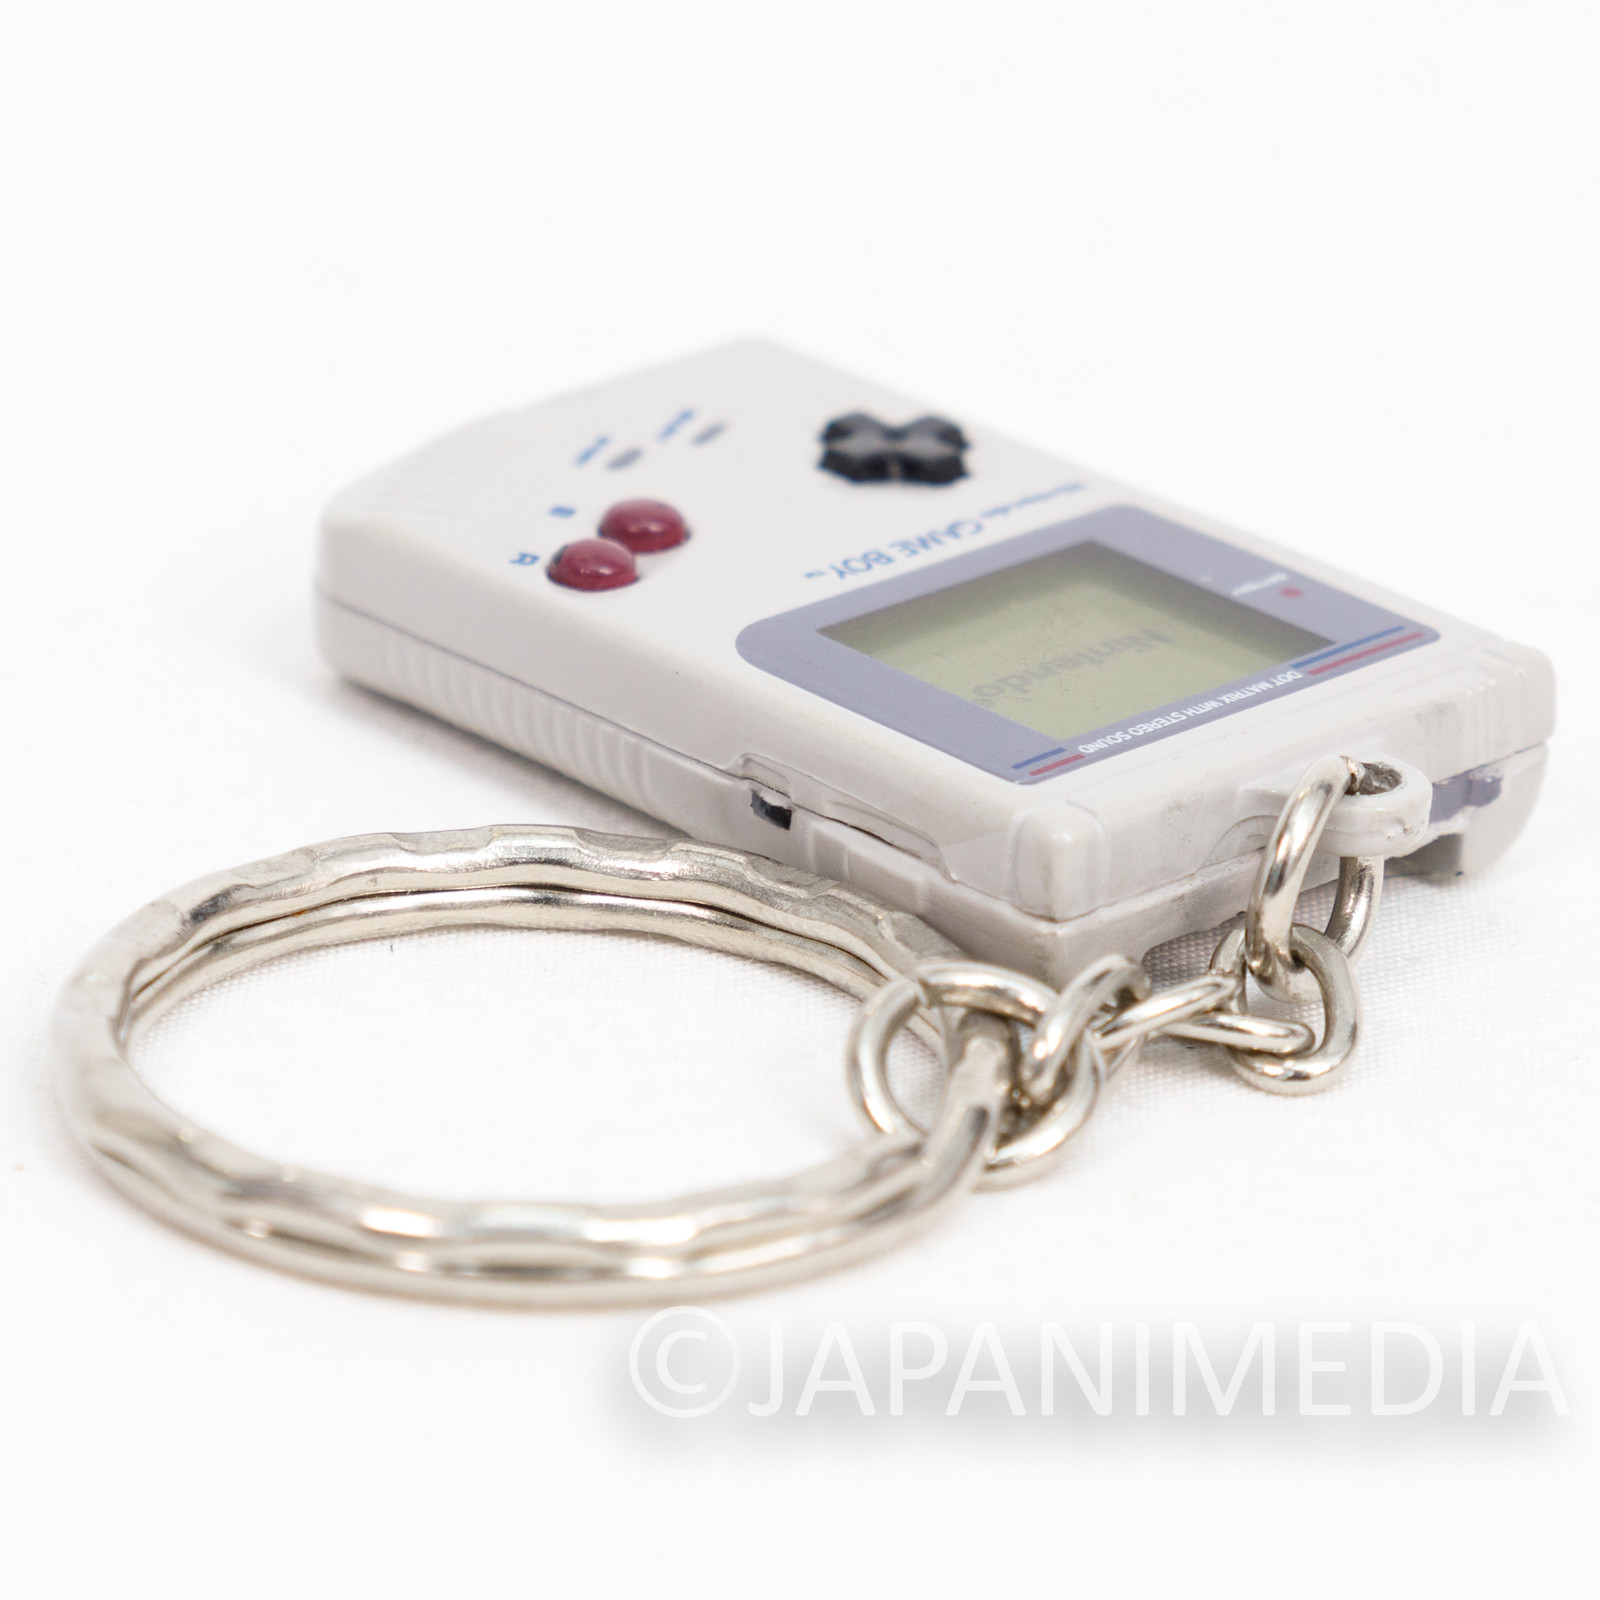 Nintendo Game Console History Miniature Figure Key Chain Game Boy 2